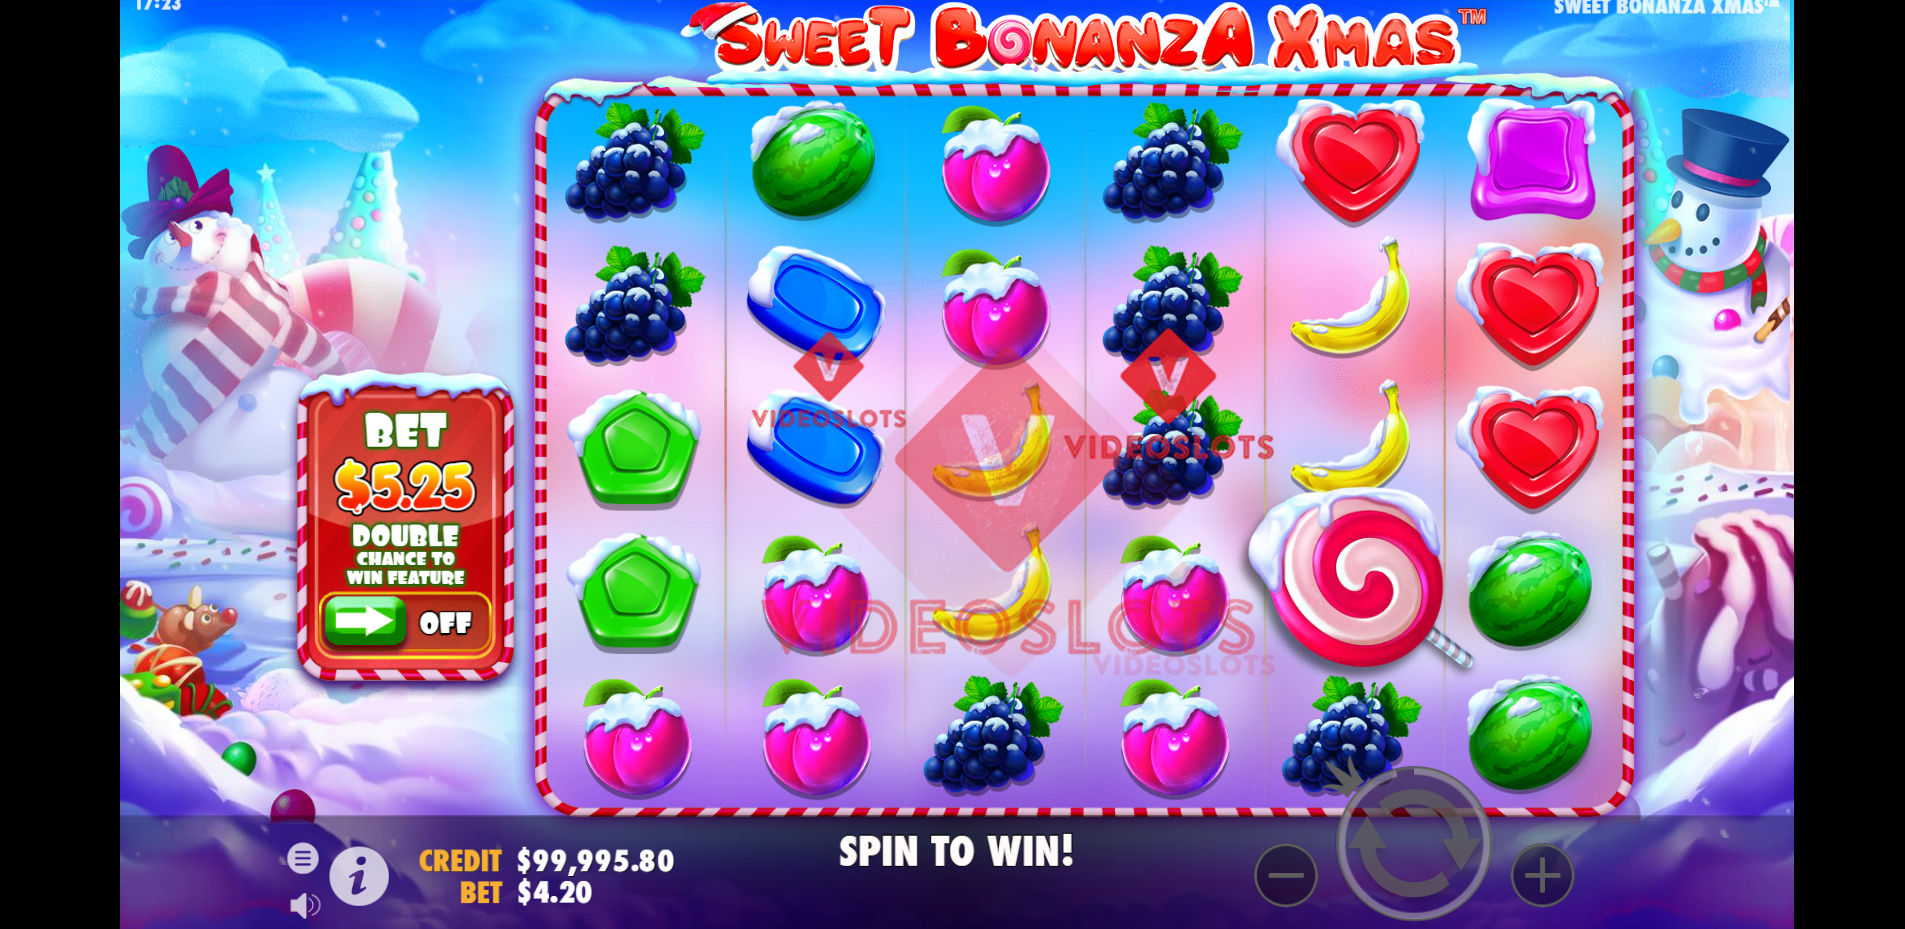 Base Game for Sweet Bonanza Xmas slot by Pragmatic Play